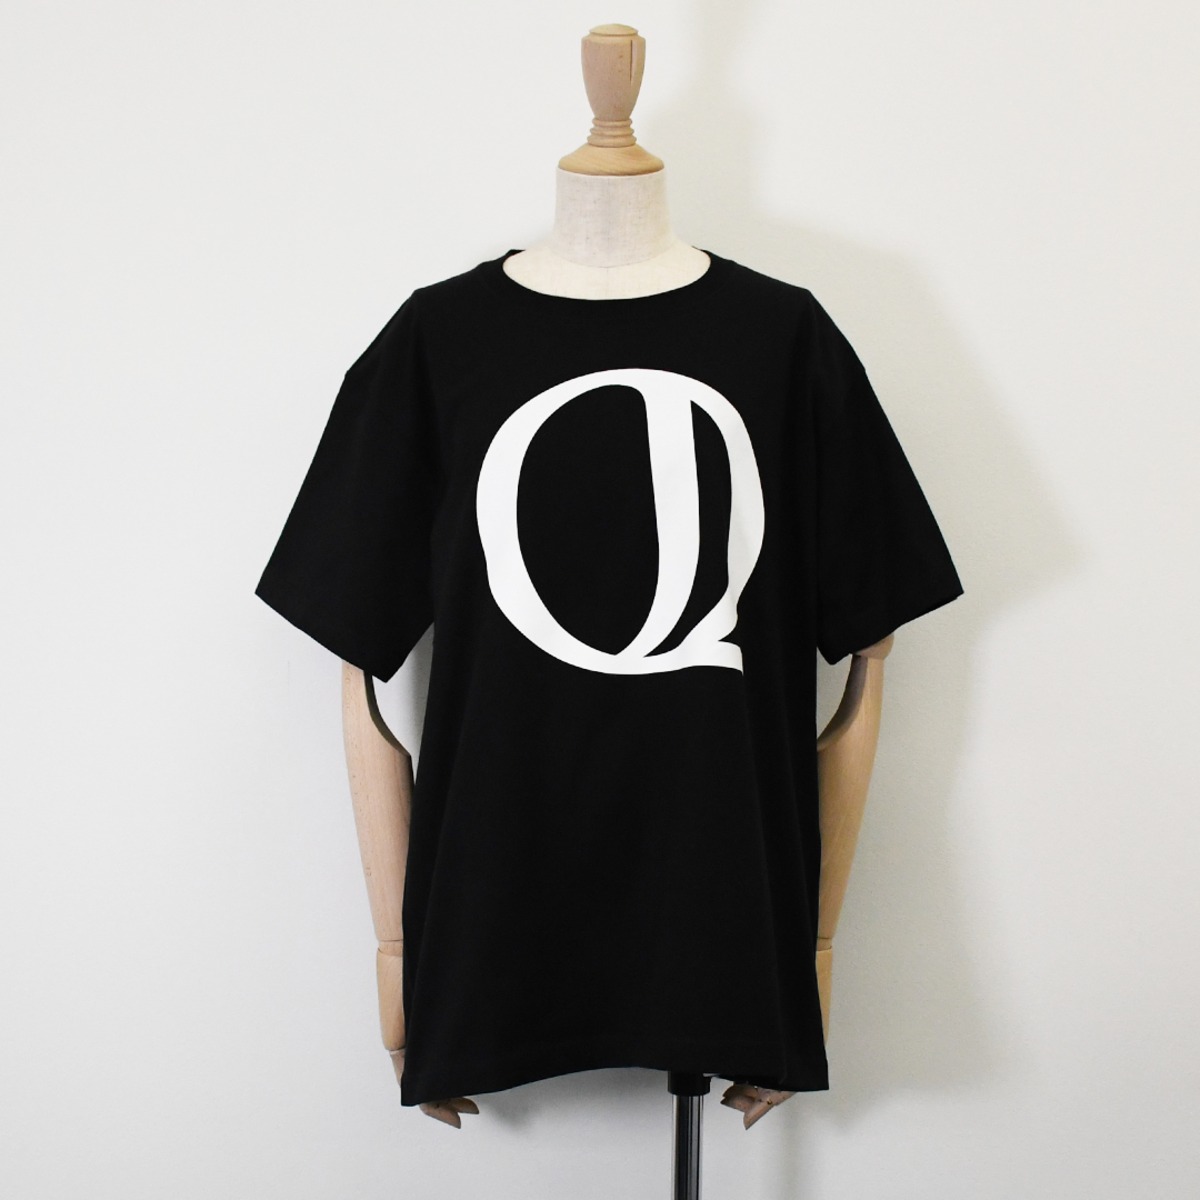 2021 Christmas限定 J_O ORIGINAL Tシャツ ブラック